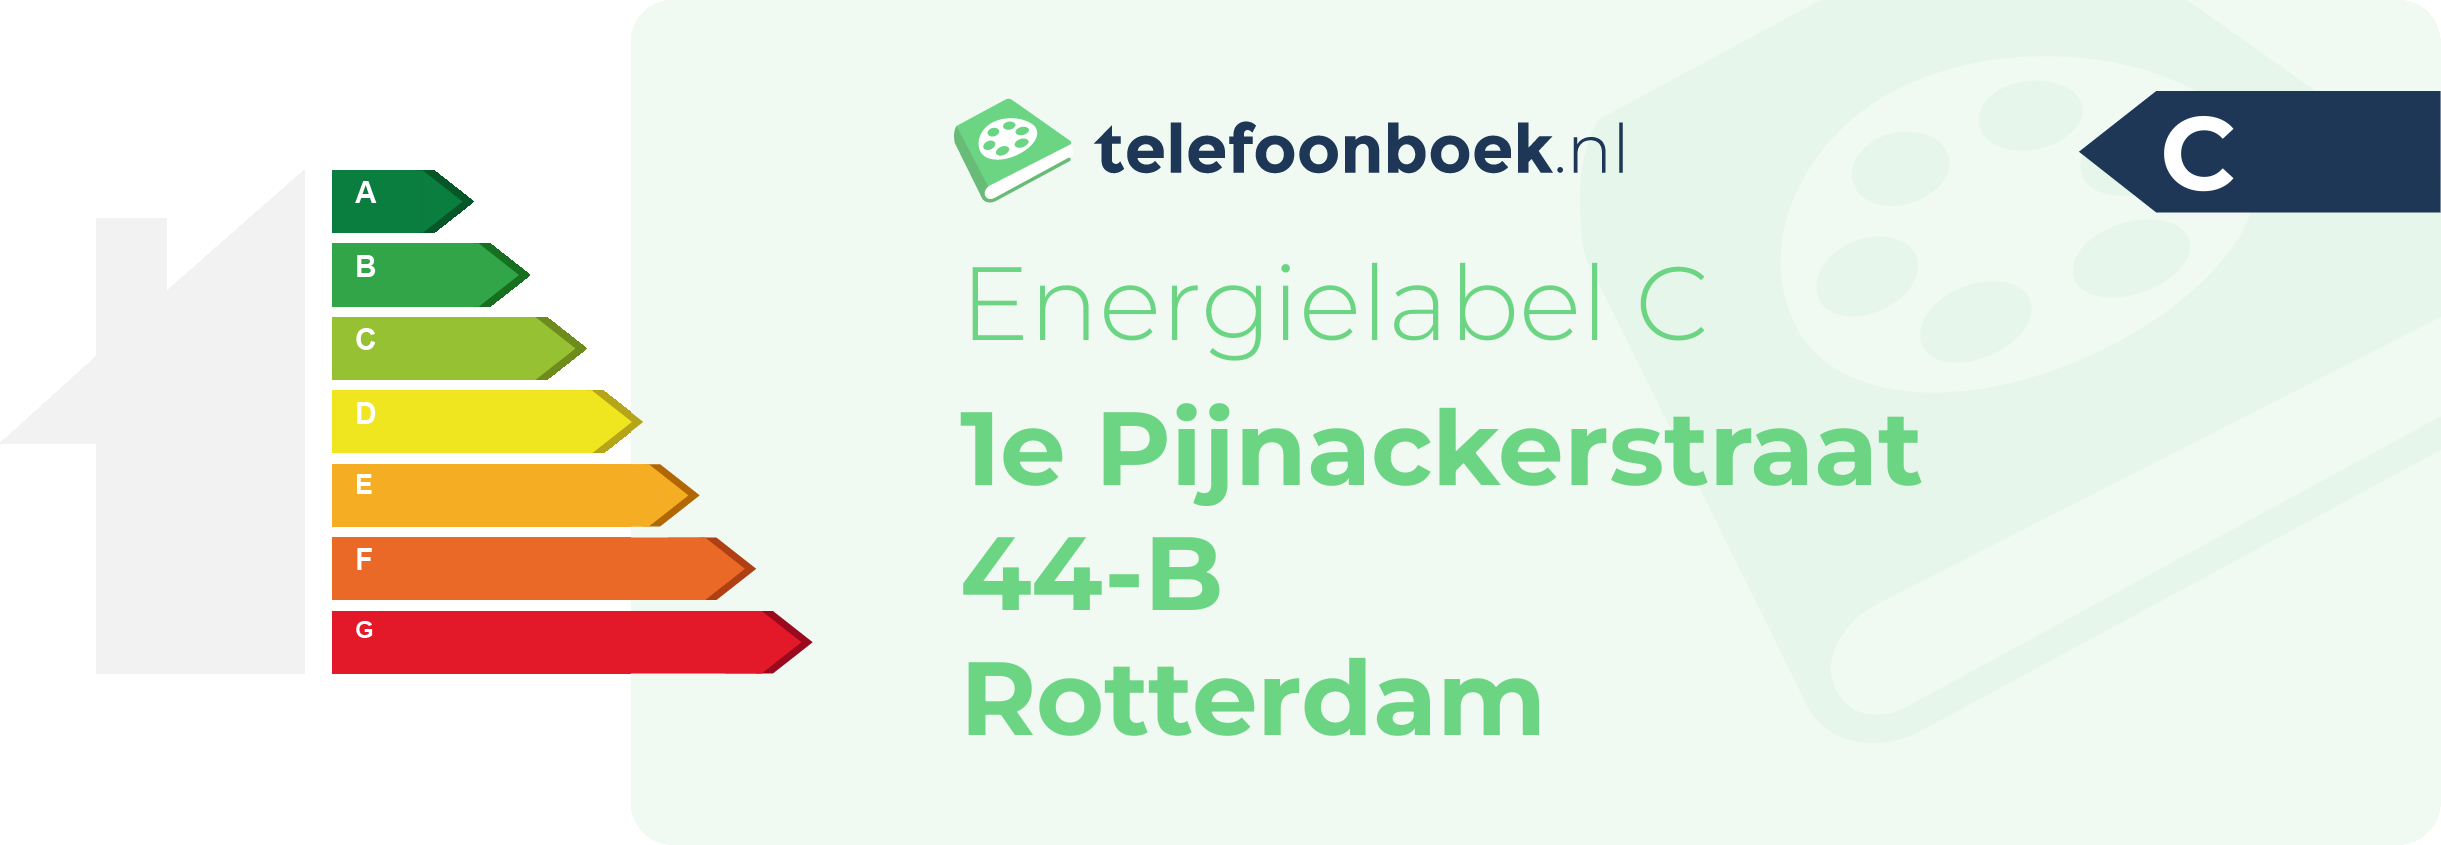 Energielabel 1e Pijnackerstraat 44-B Rotterdam